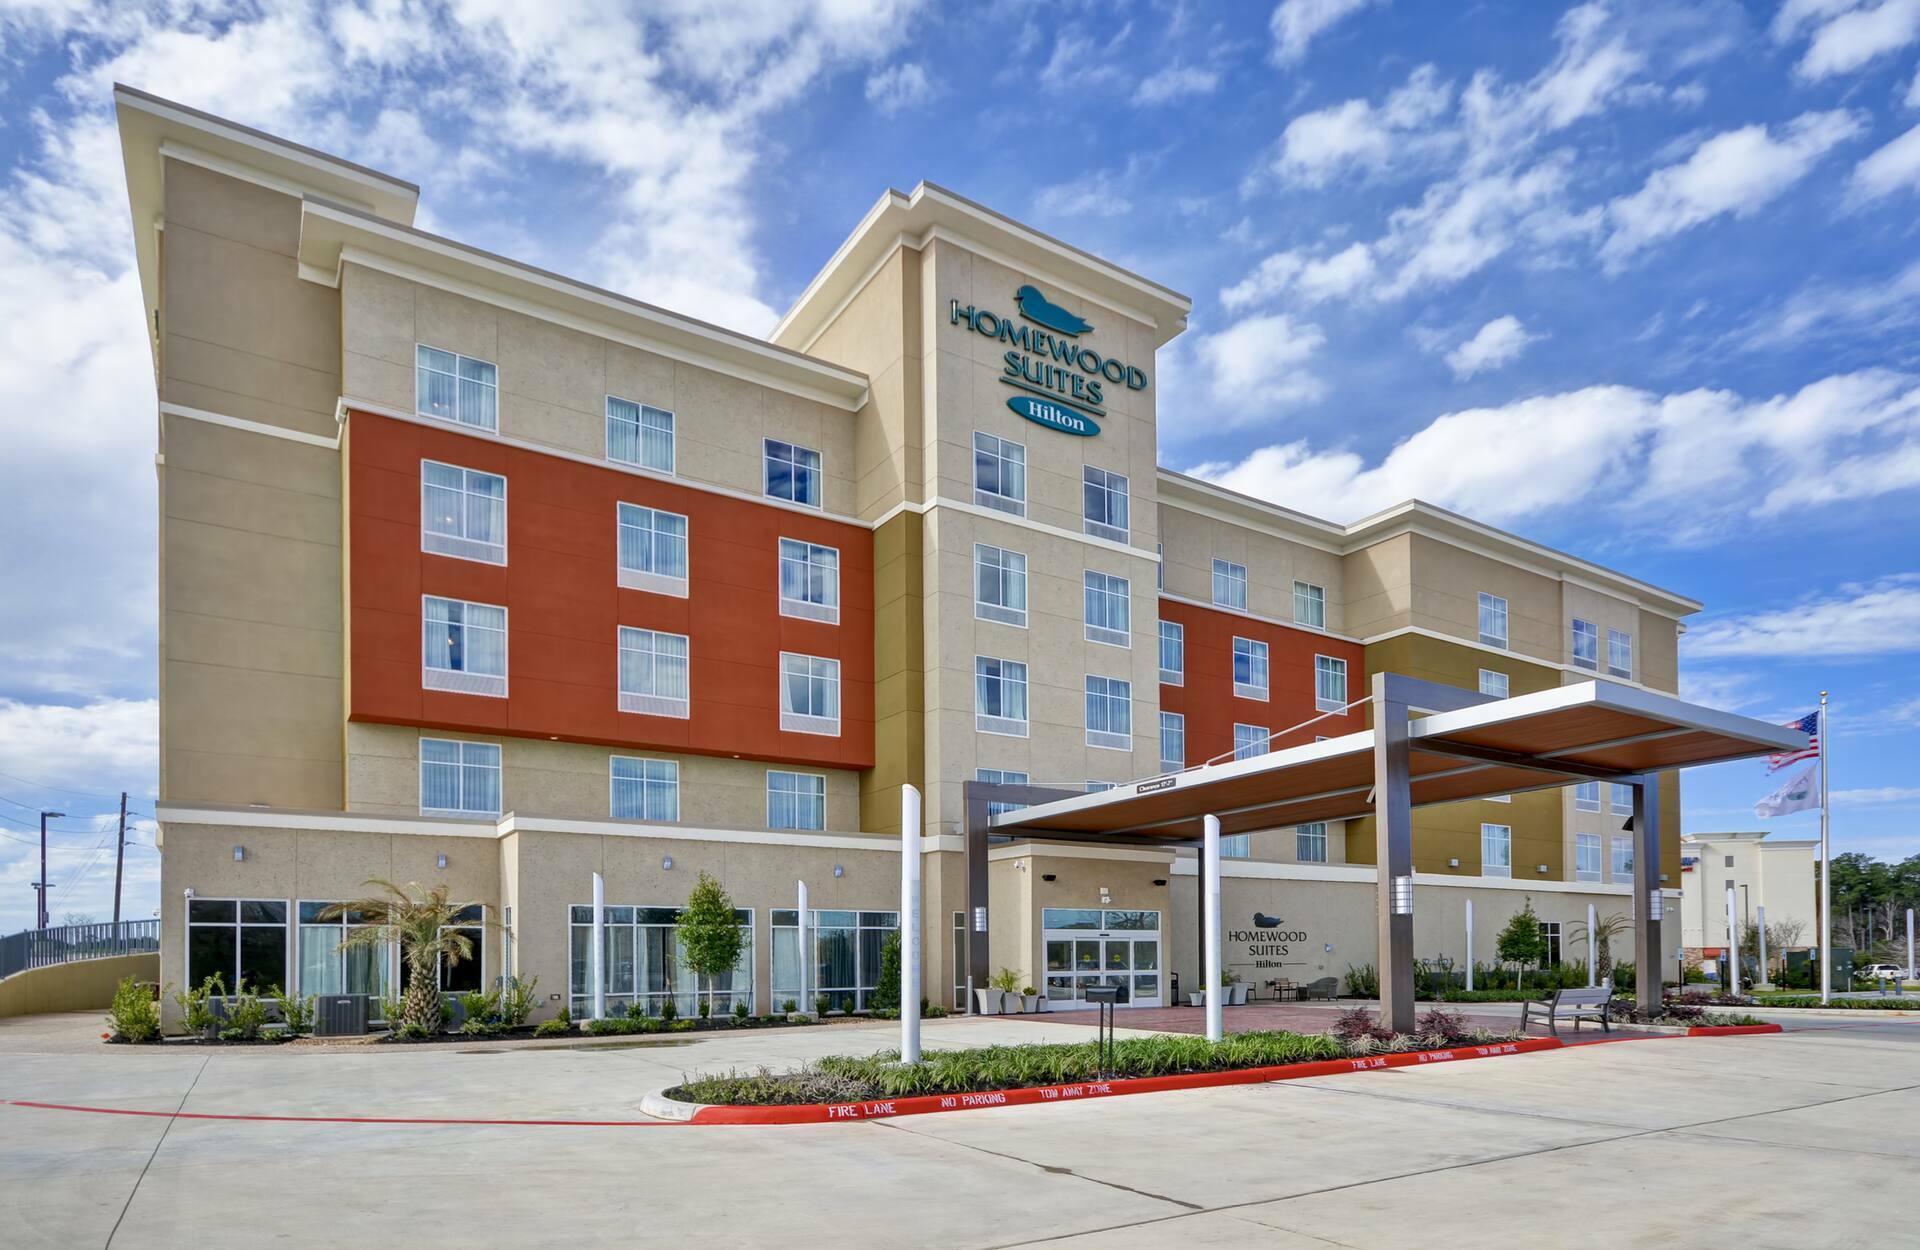 Photo of Homewood Suites by Hilton Conroe, Conroe, TX